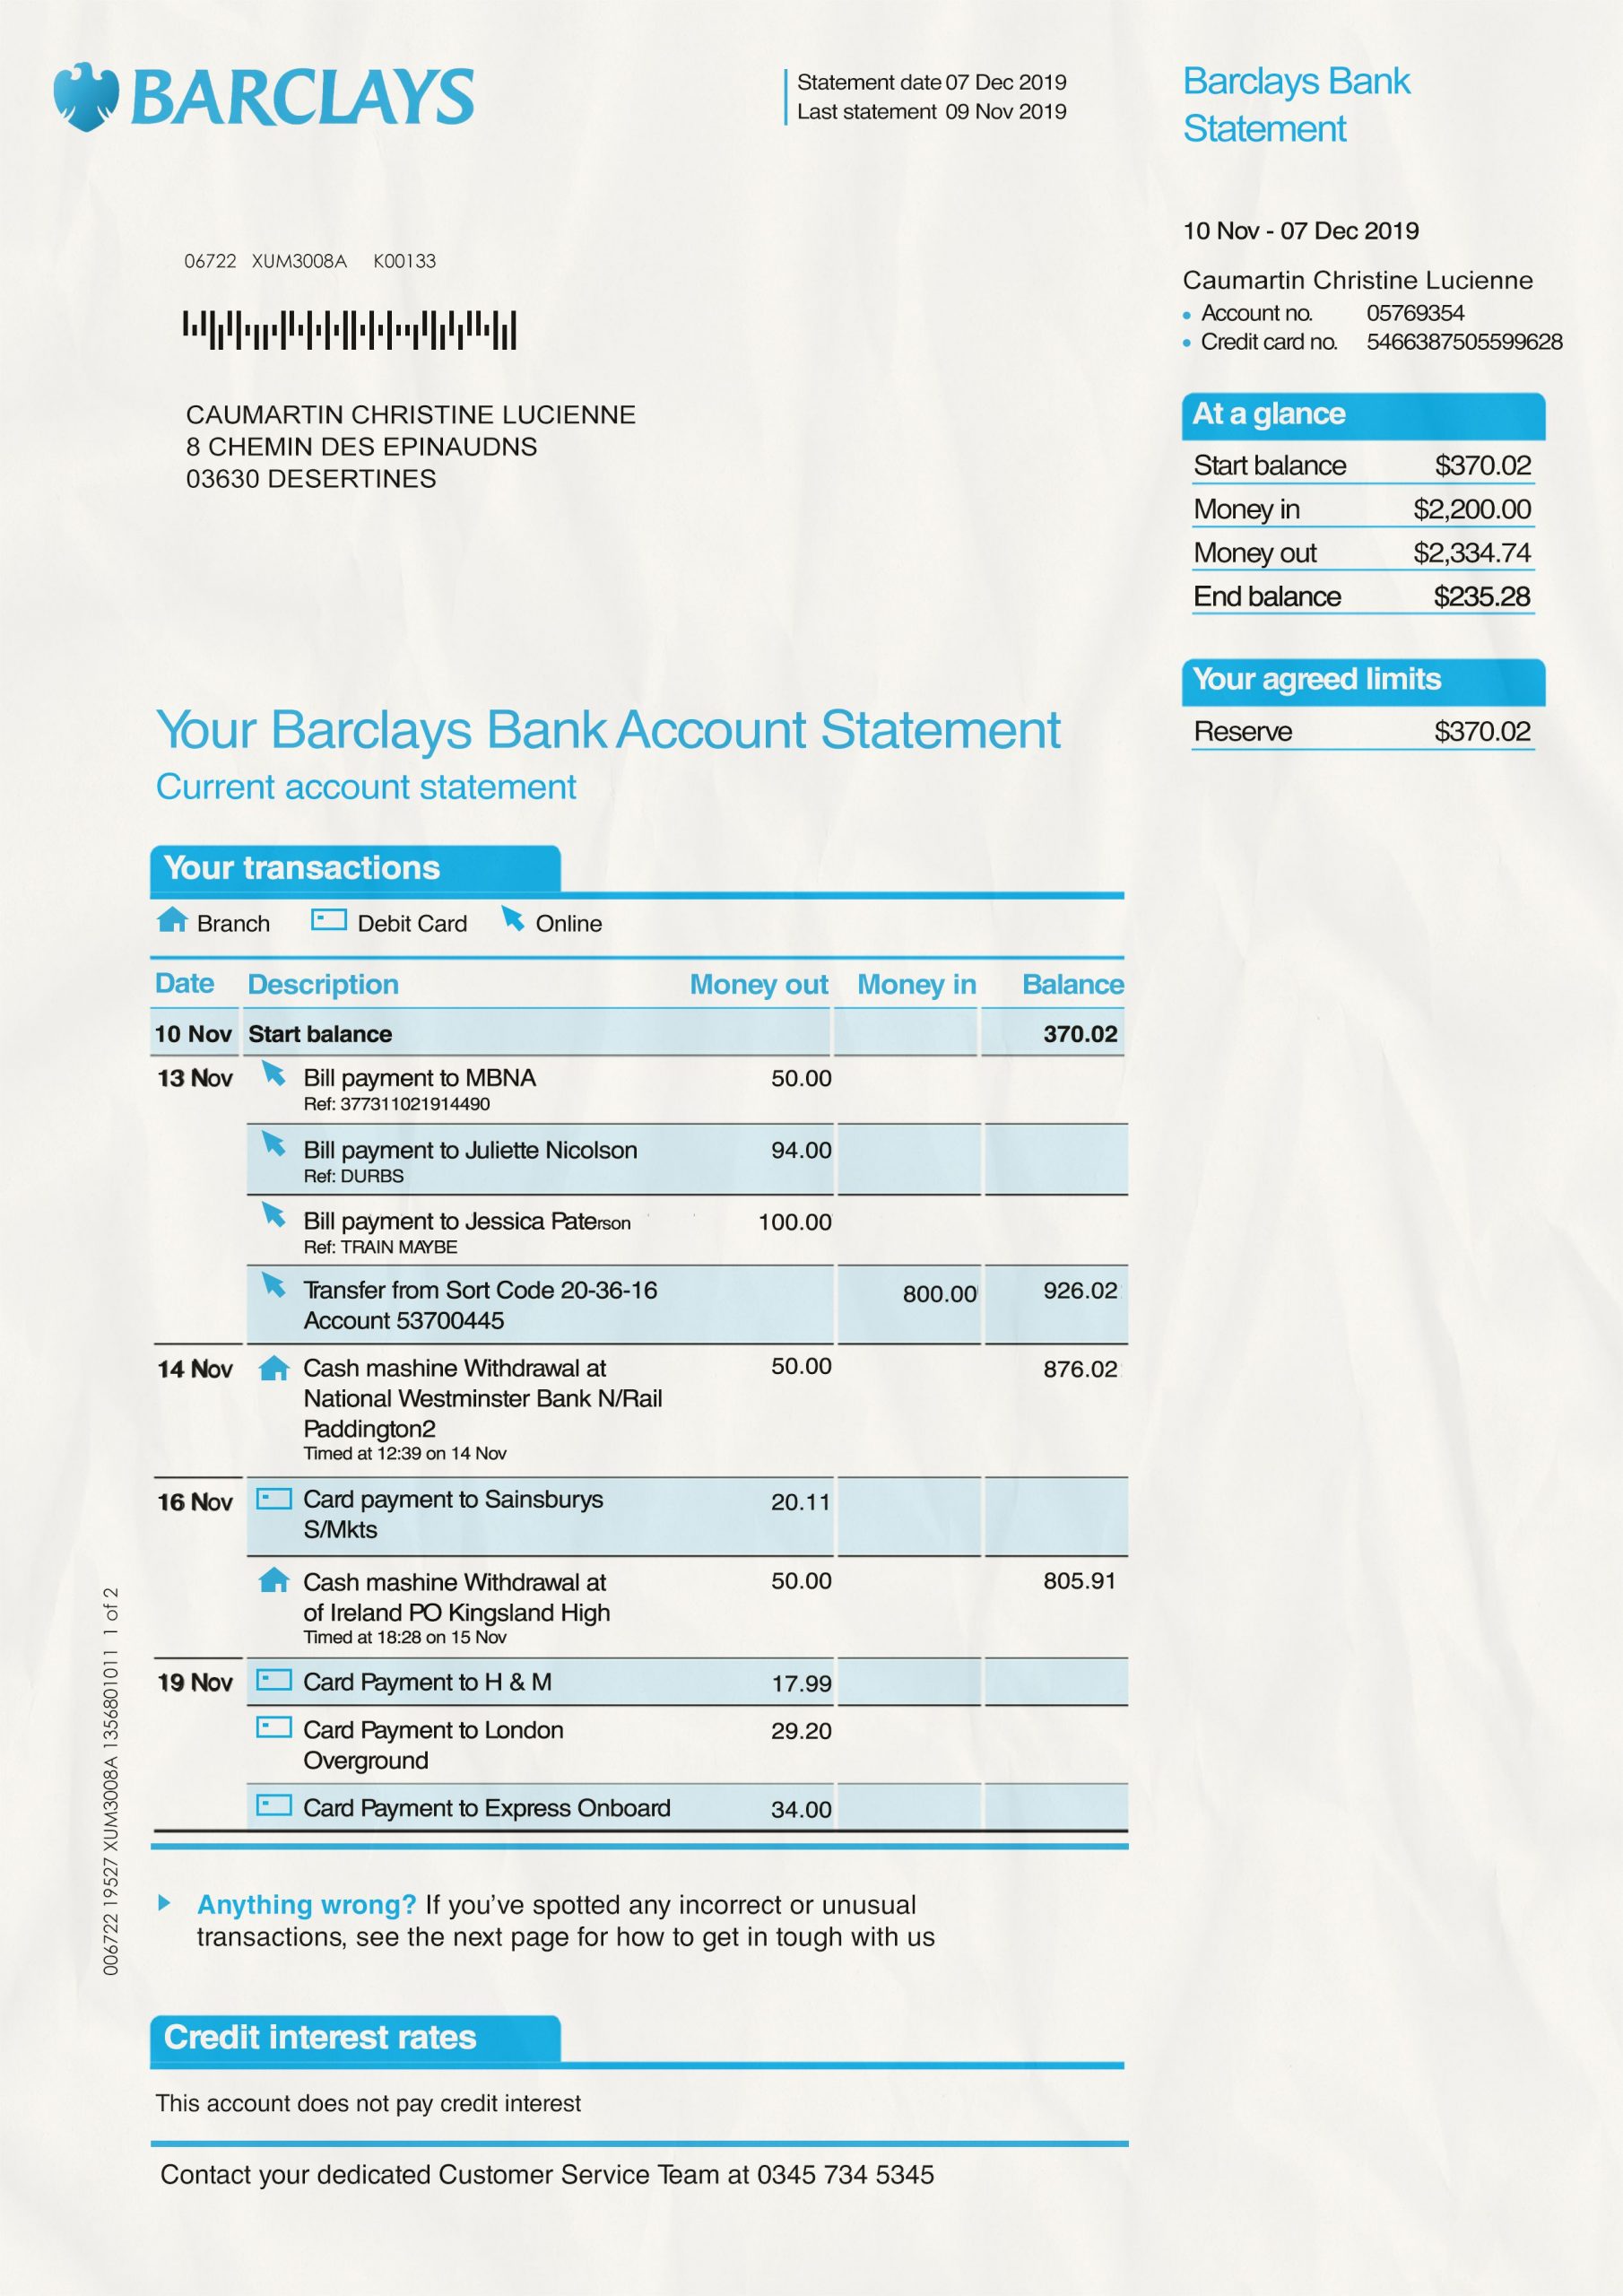 Barclays Bank Statement psd template  Amazing Tools Regarding Credit Card Bill Template